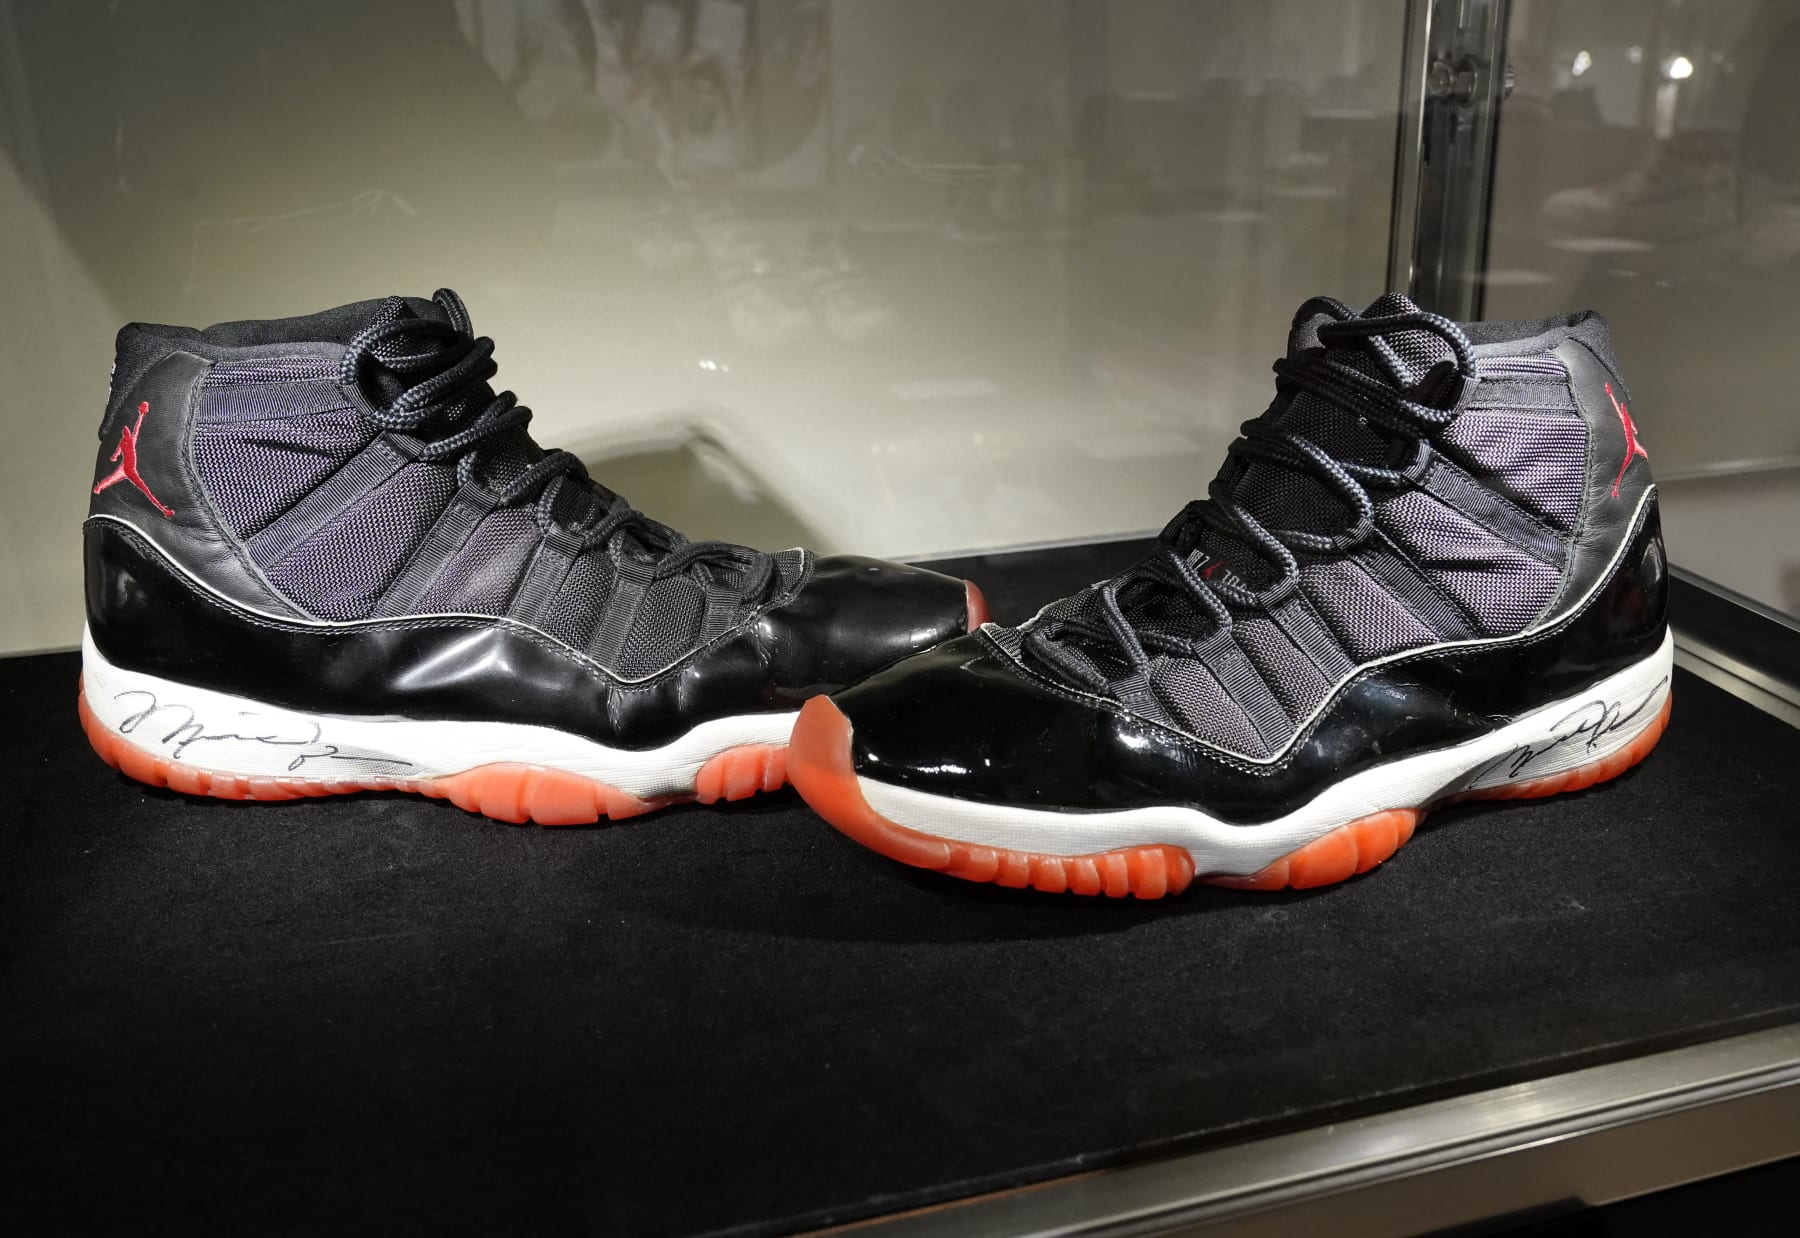 Michael Jordan's Game-Worn Sneakers from 1996 NBA Finals Sell 